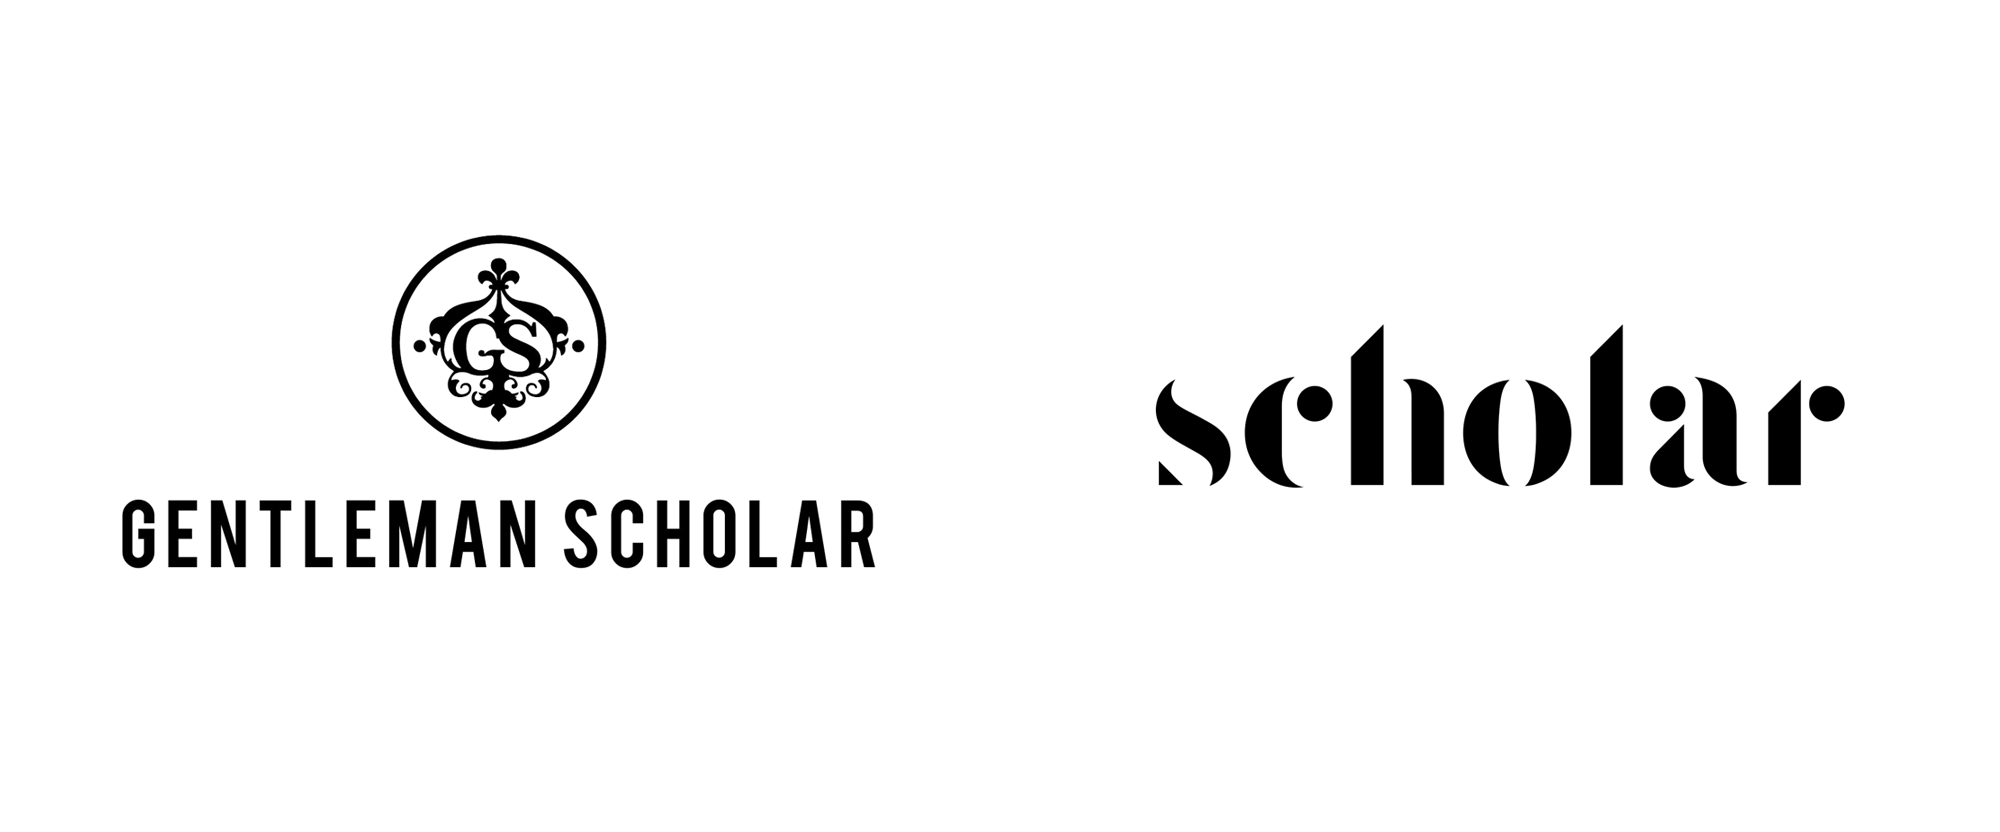 Share more than 73 scholar logo - ceg.edu.vn